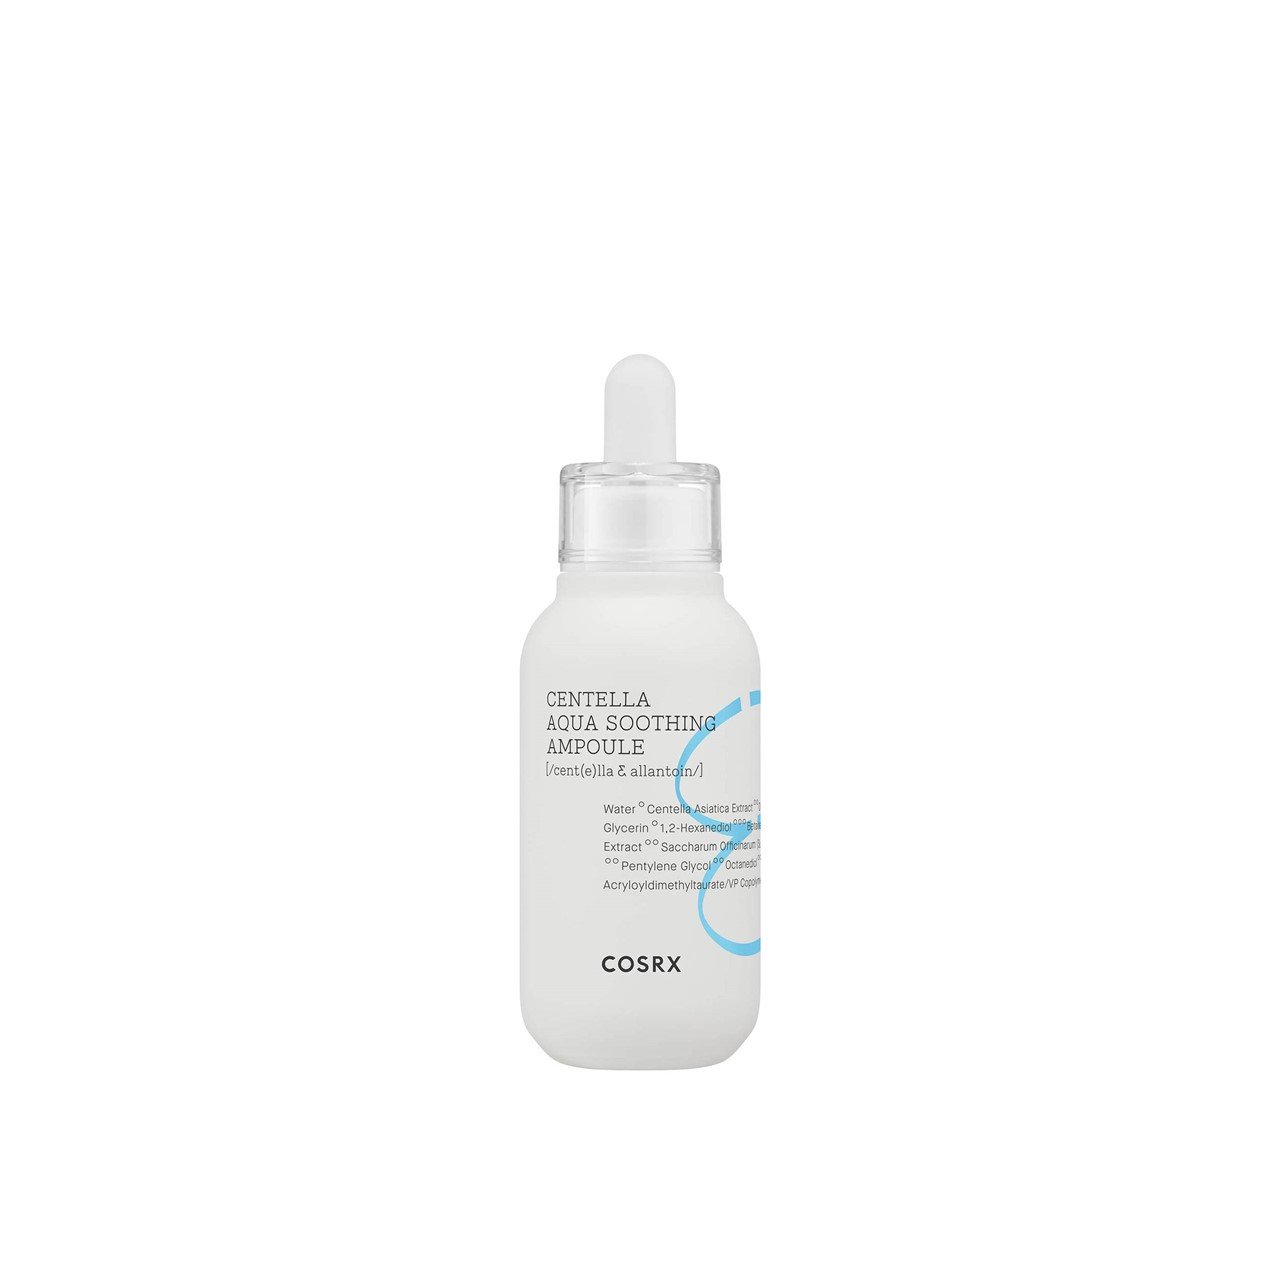 COSRX Centella Aqua Soothing Ampoule 40ml (1.35fl oz)